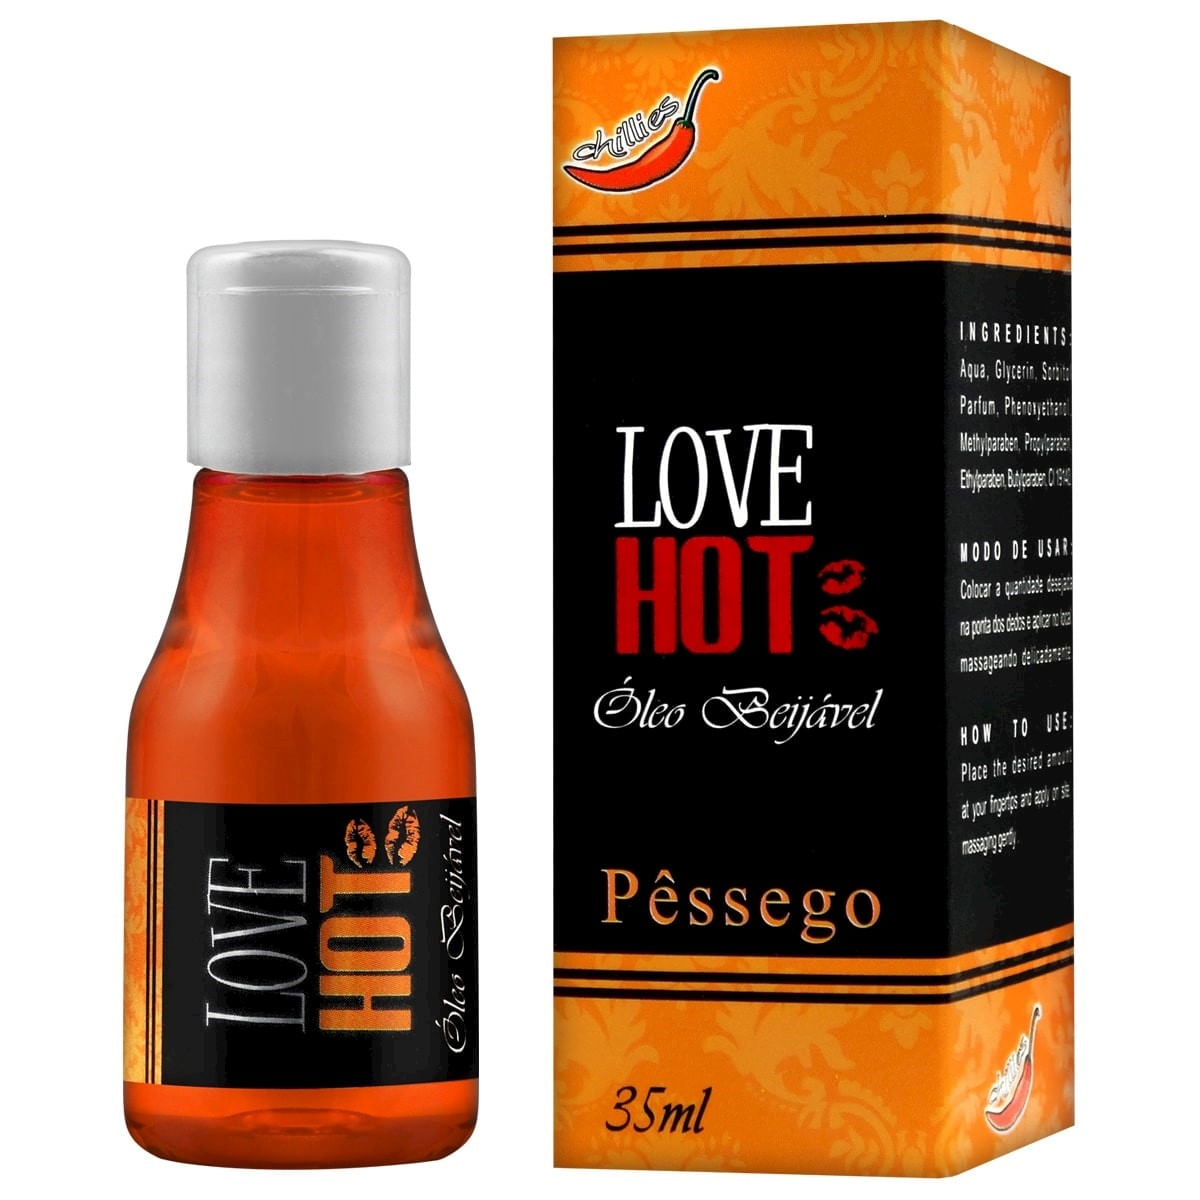 Love Hot Óleo Beijável de Pêssego 35ml Chillies